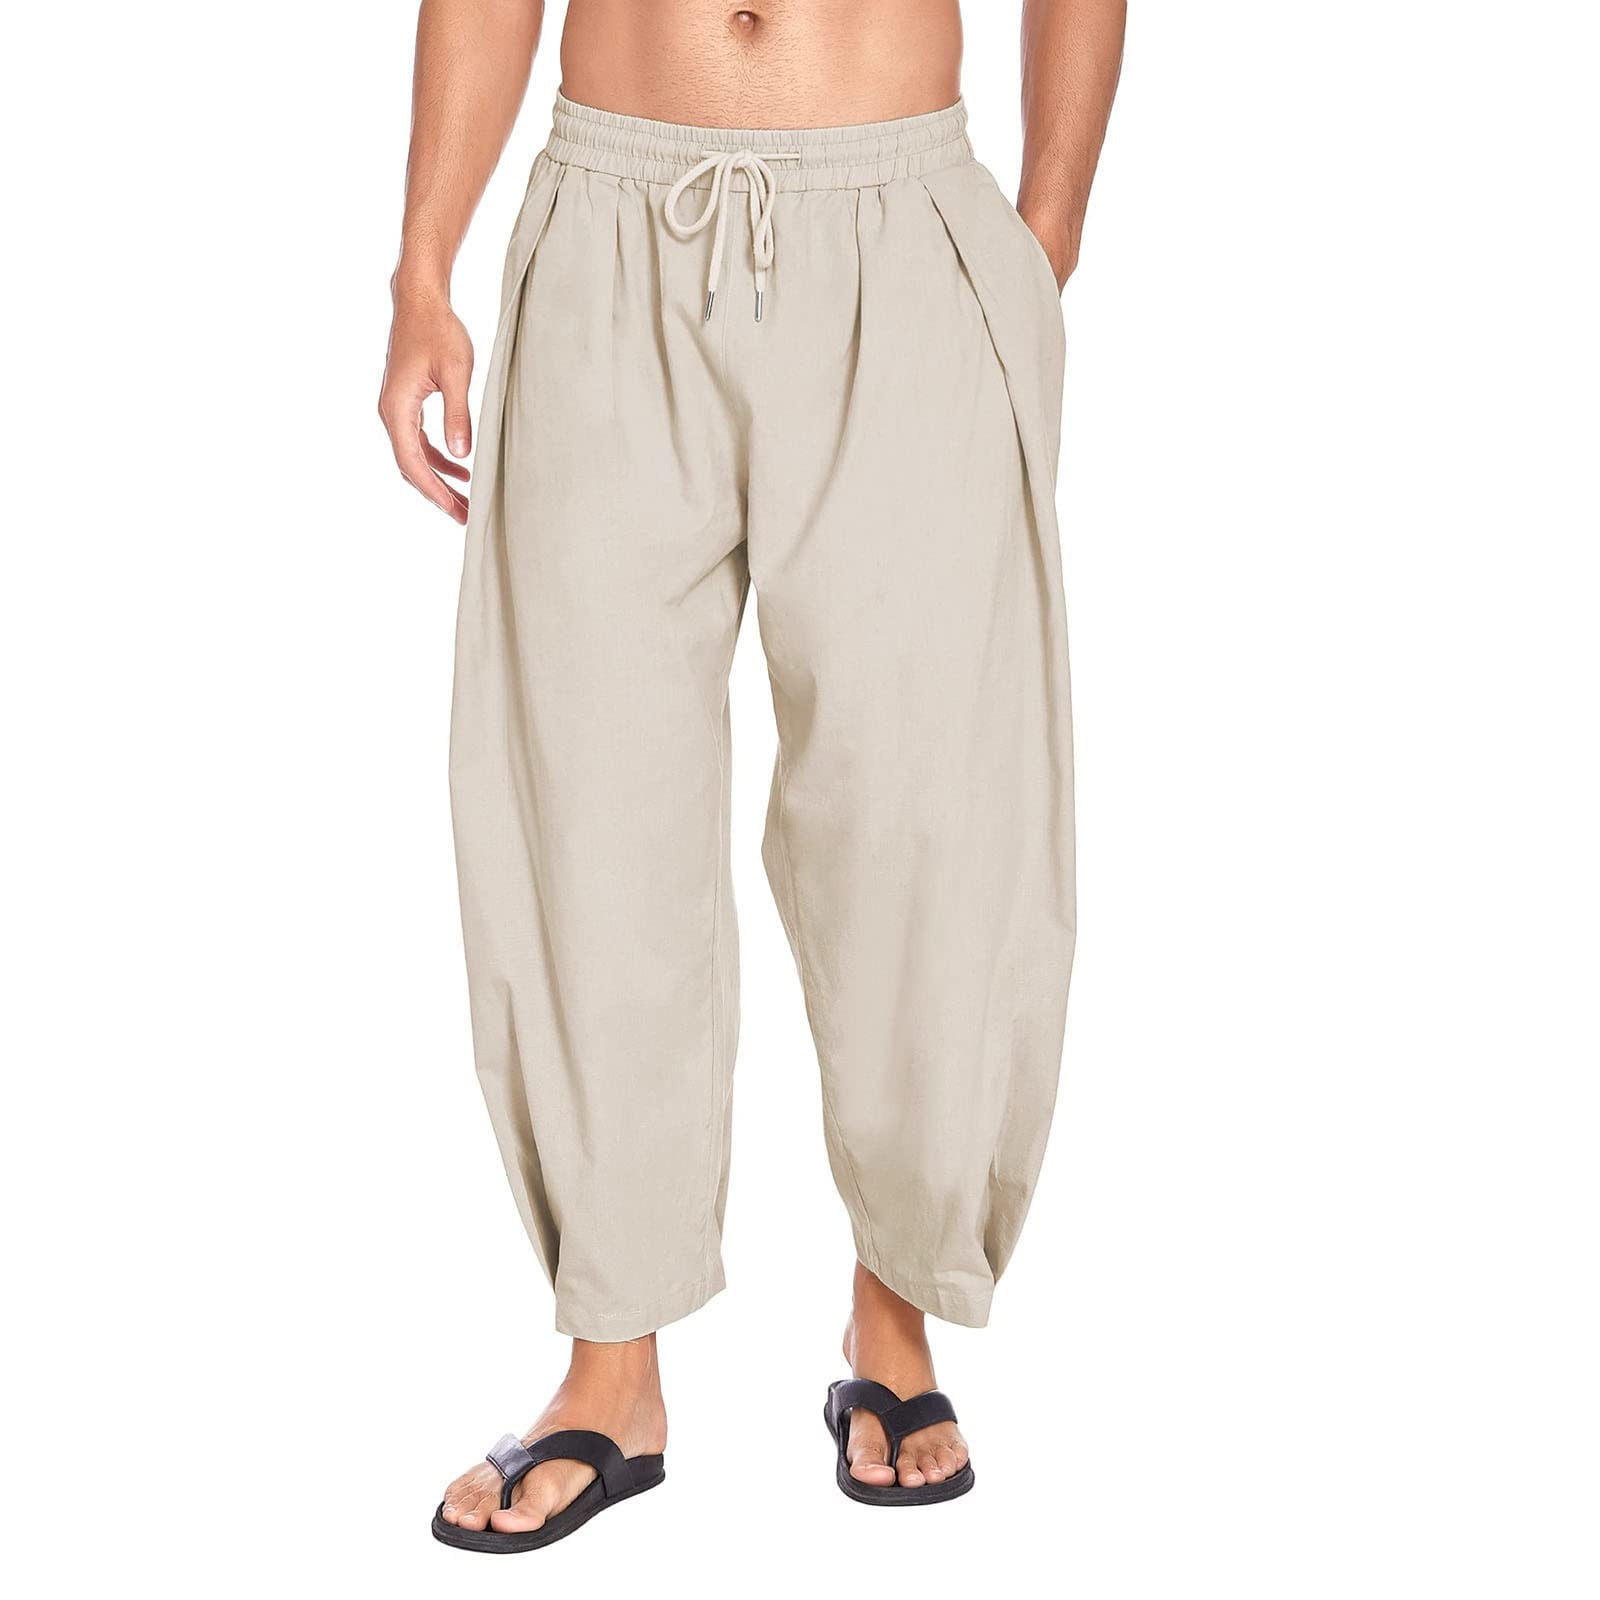 Best Deal for WENKOMG1 Mens Cotton Linen Harem Shorts,Hippie Asian